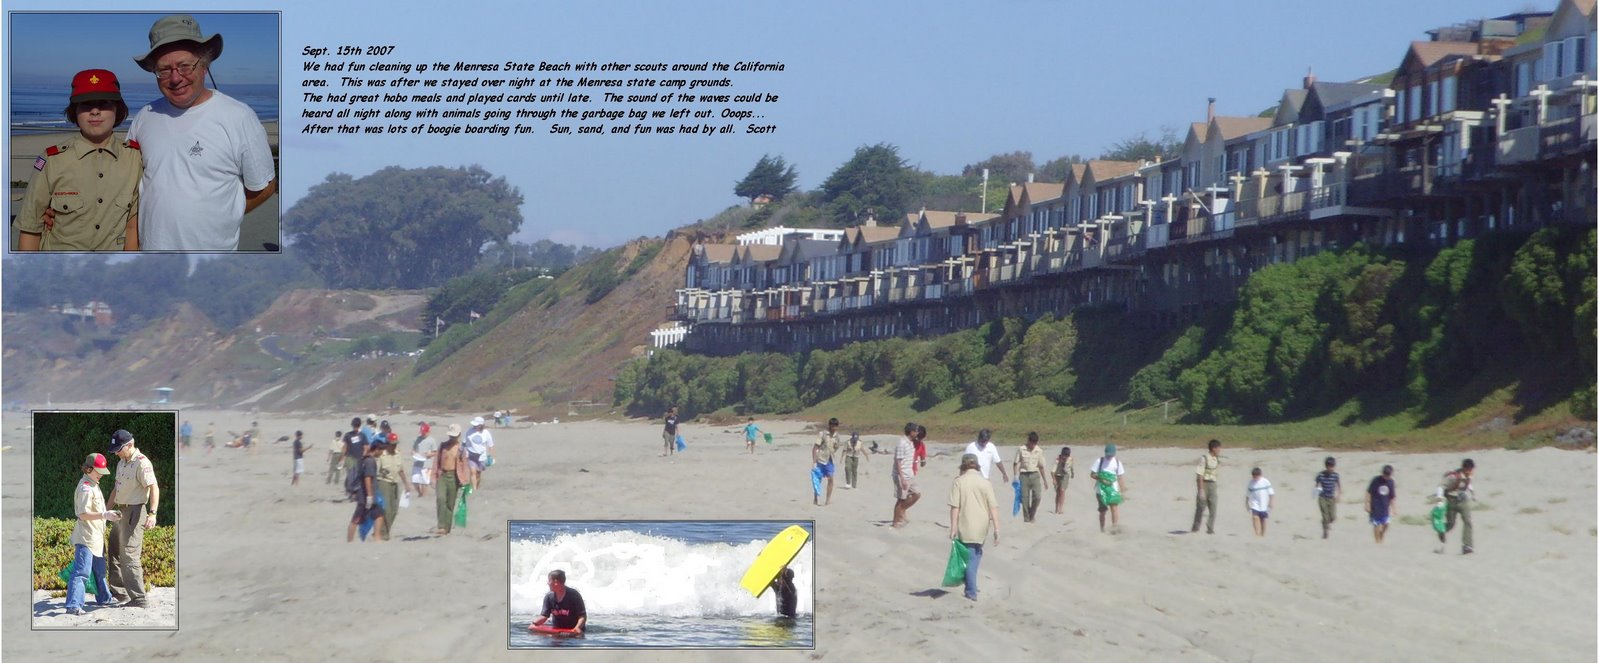 [web-2007-Sept-14-manresa-beach-clean.JPG]